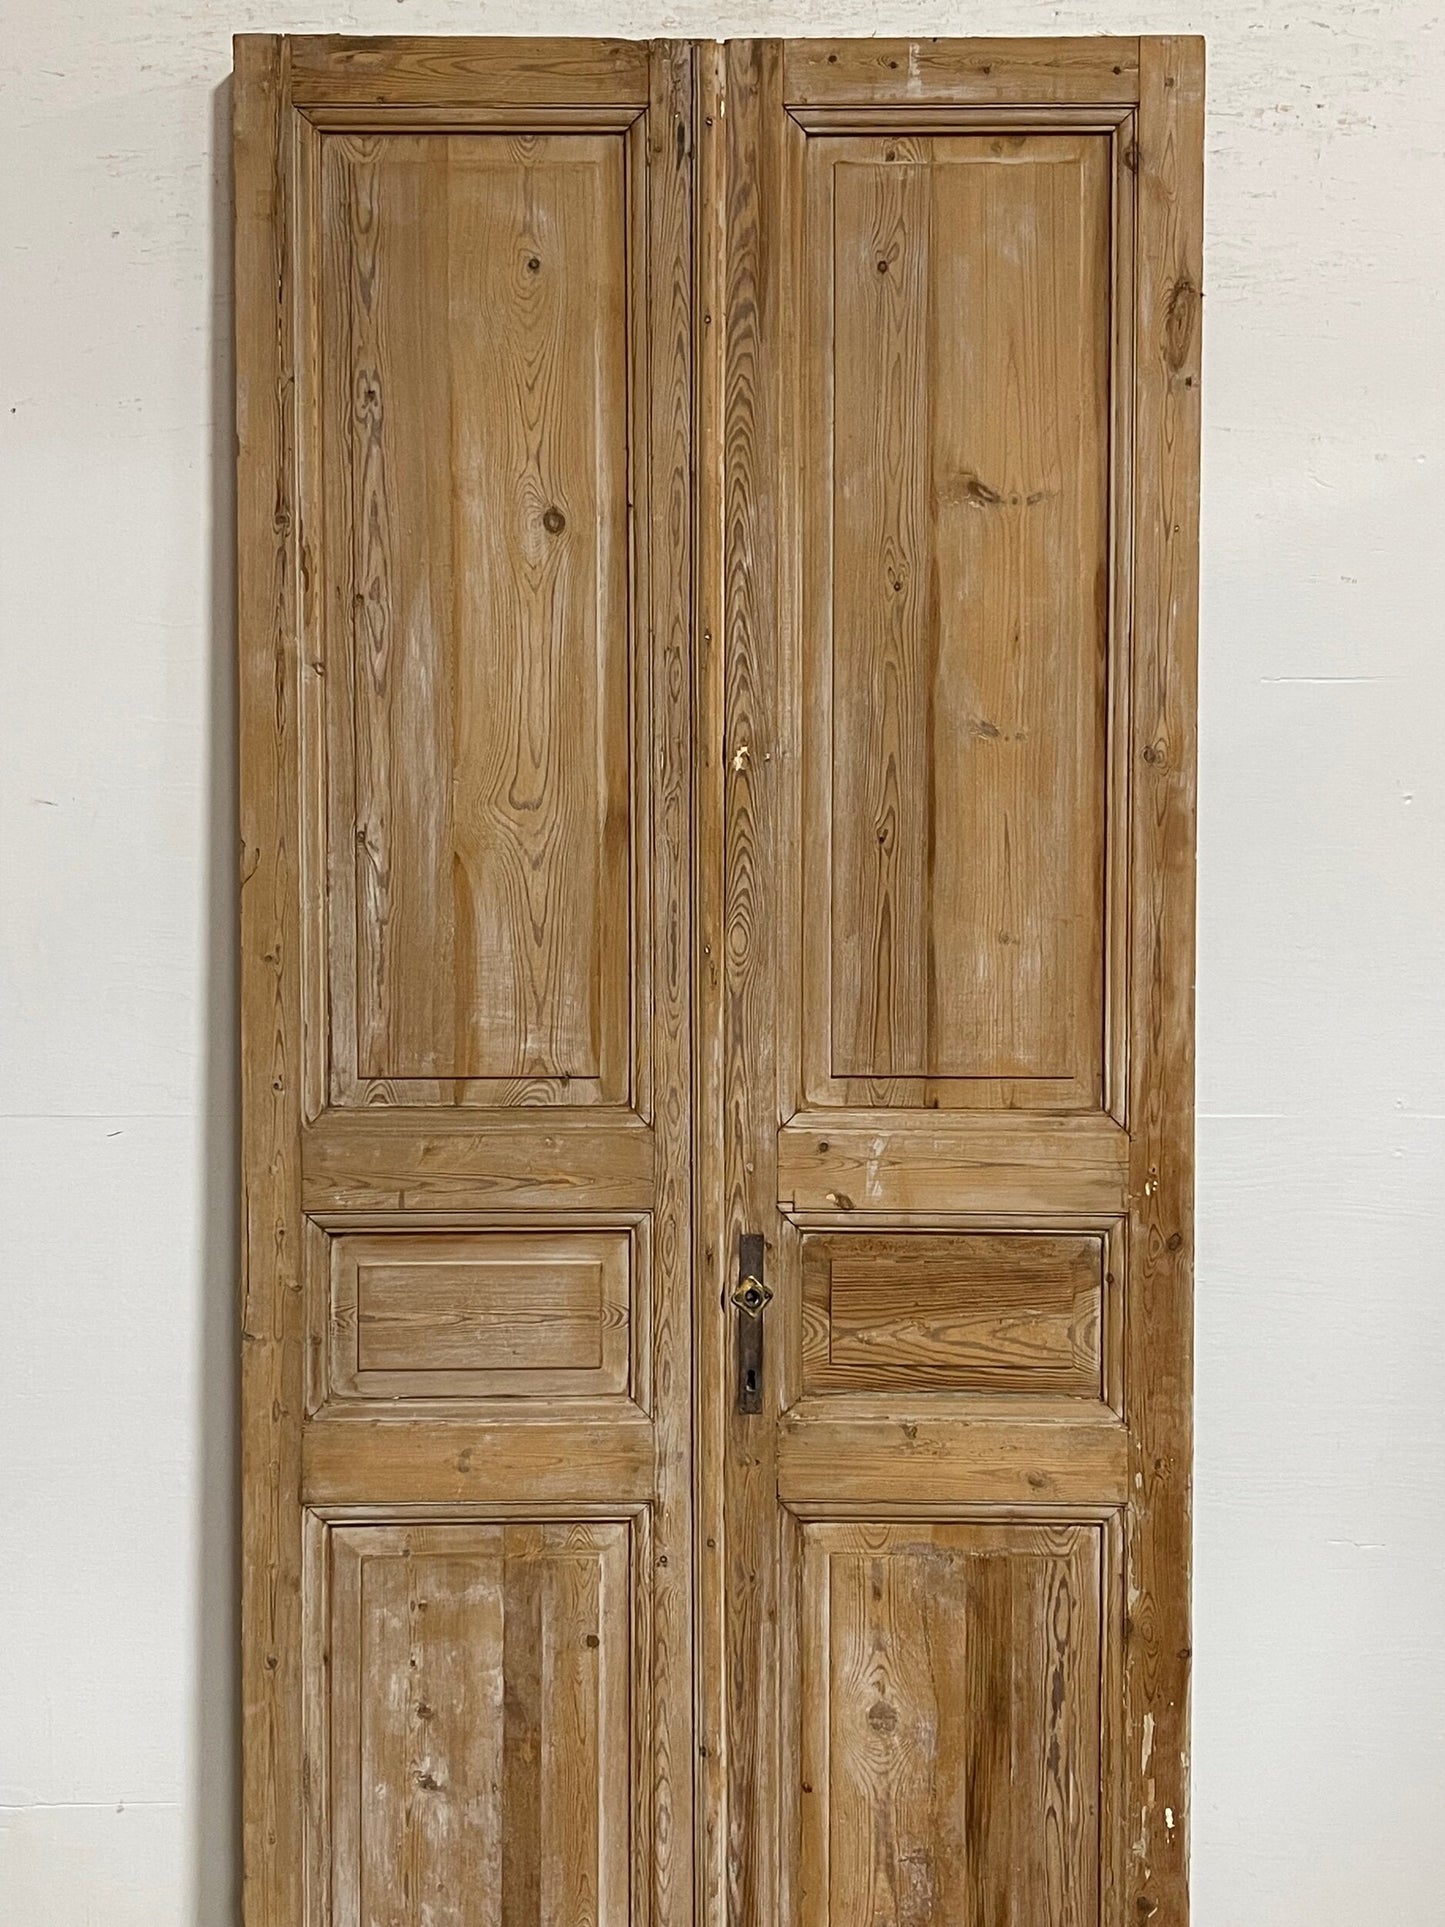 Antique french panel doors (93 x 40) I101